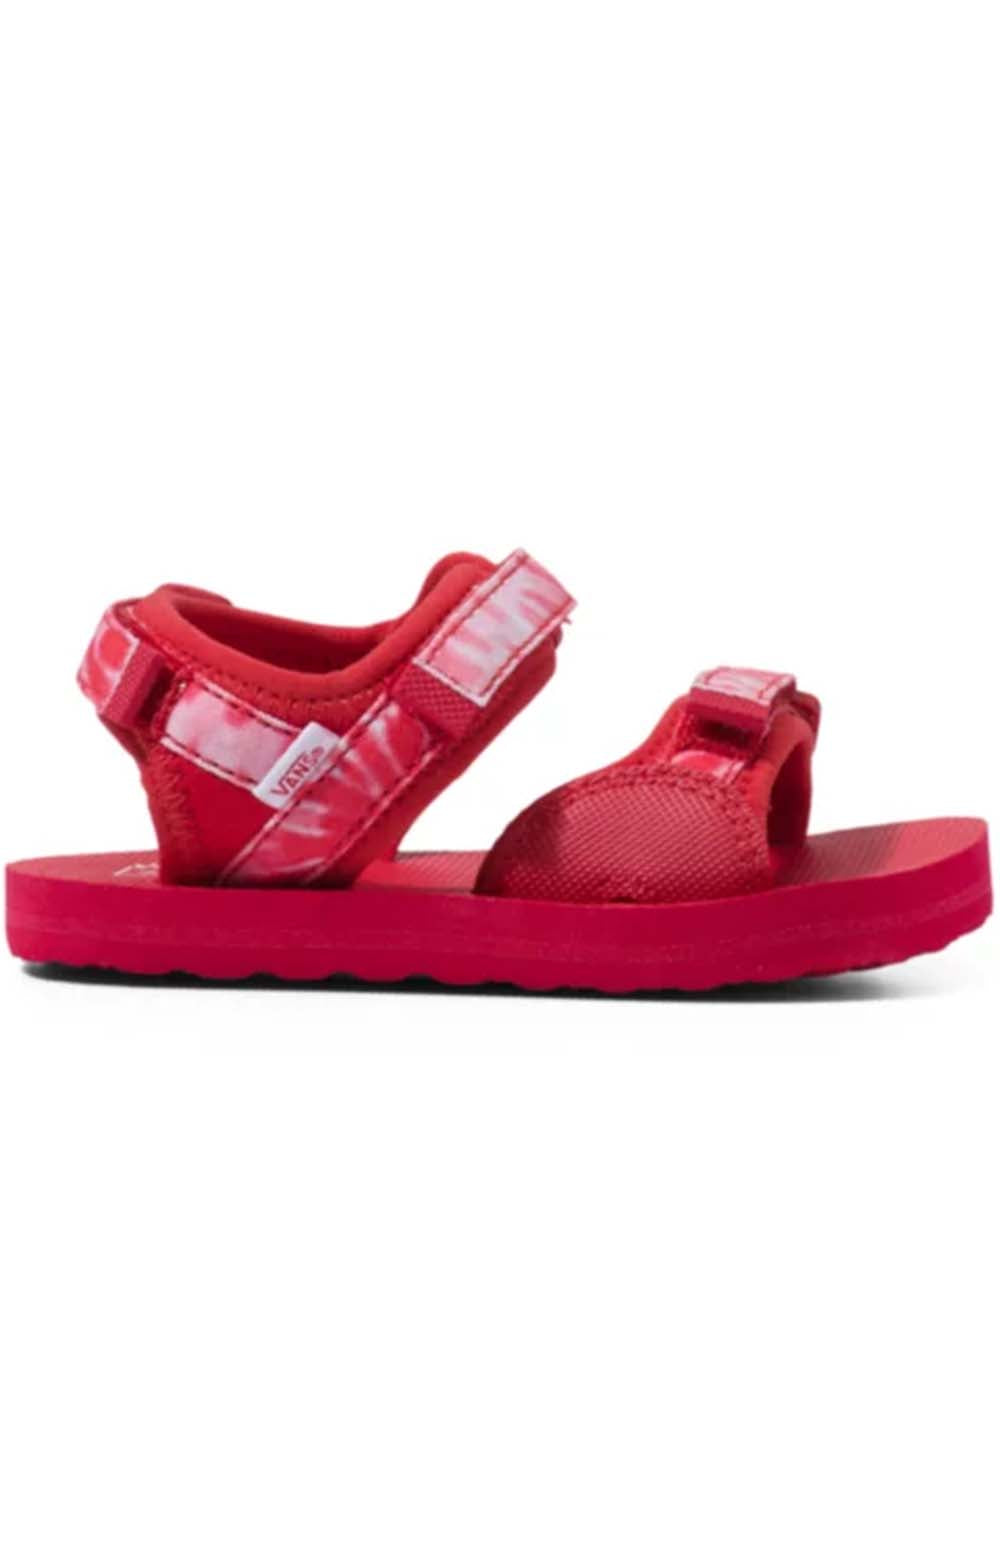 (DXFASD) Tri-Lock Sandals - Red